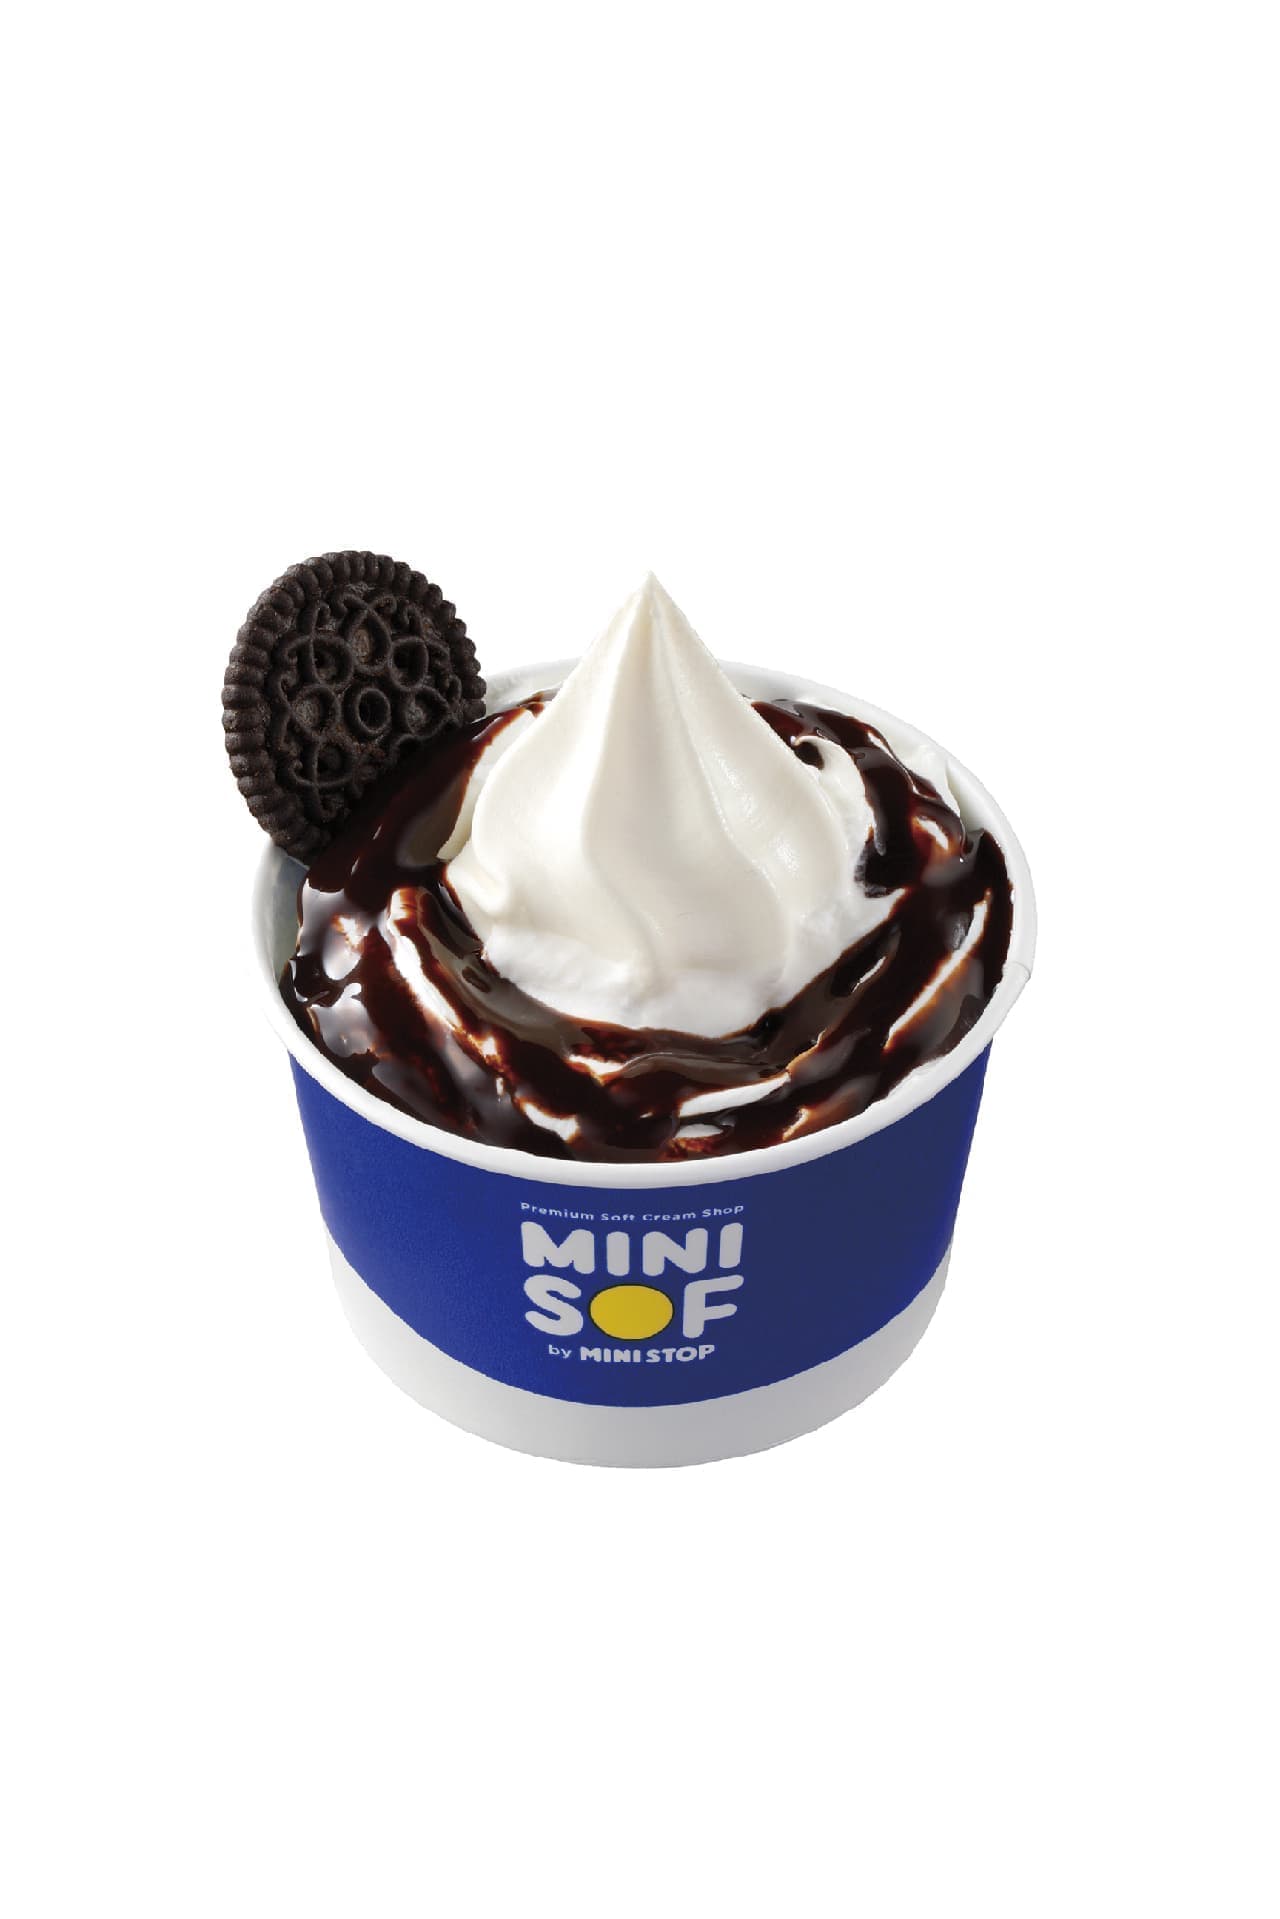 Minisof "melty chocolate soft serve ice cream